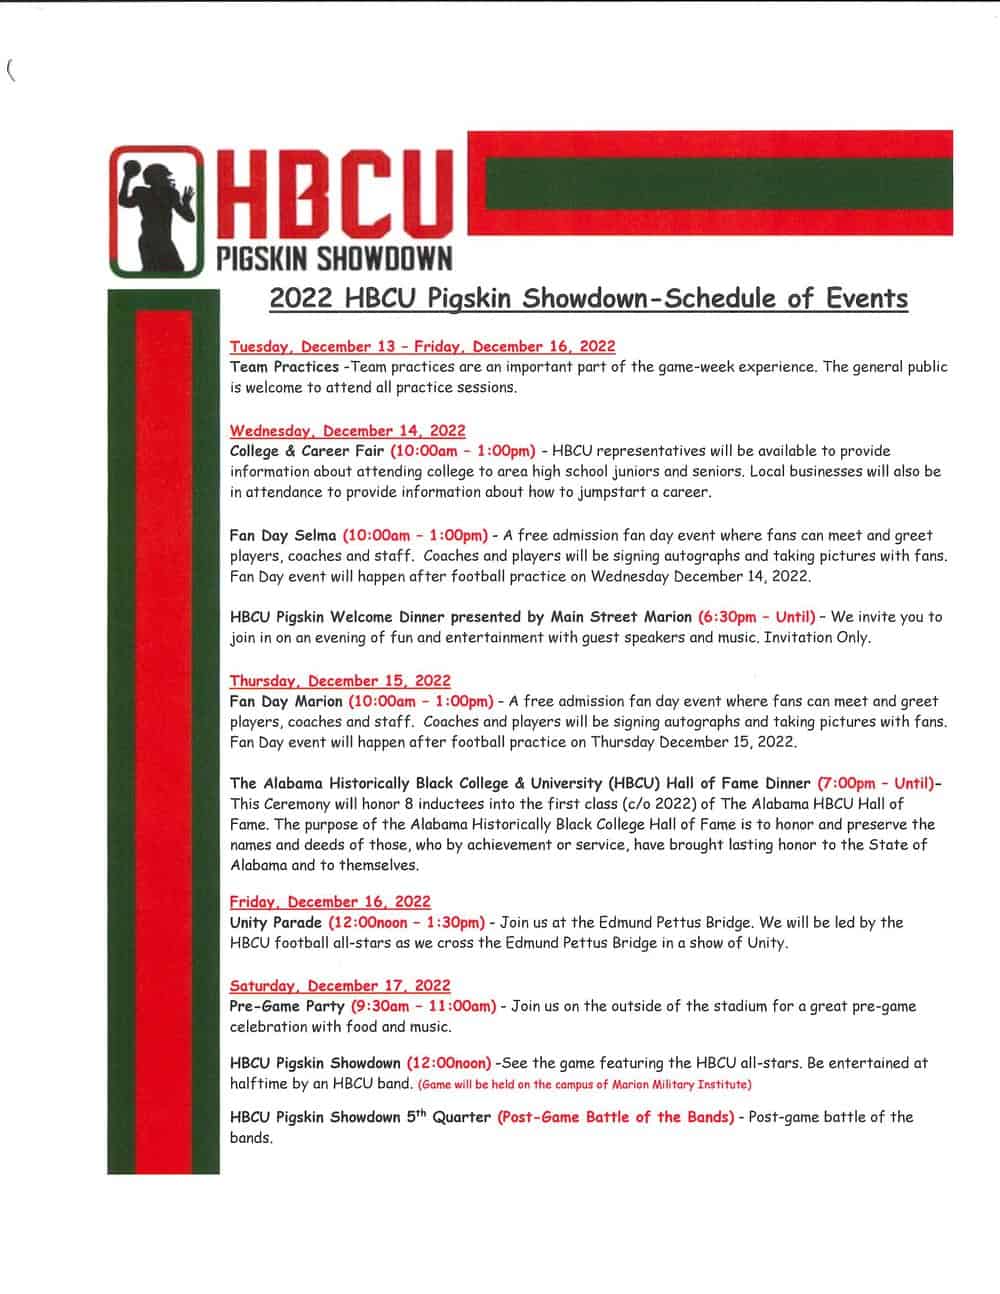 HBCU Pigskin Showdown Updated Schedule of Events